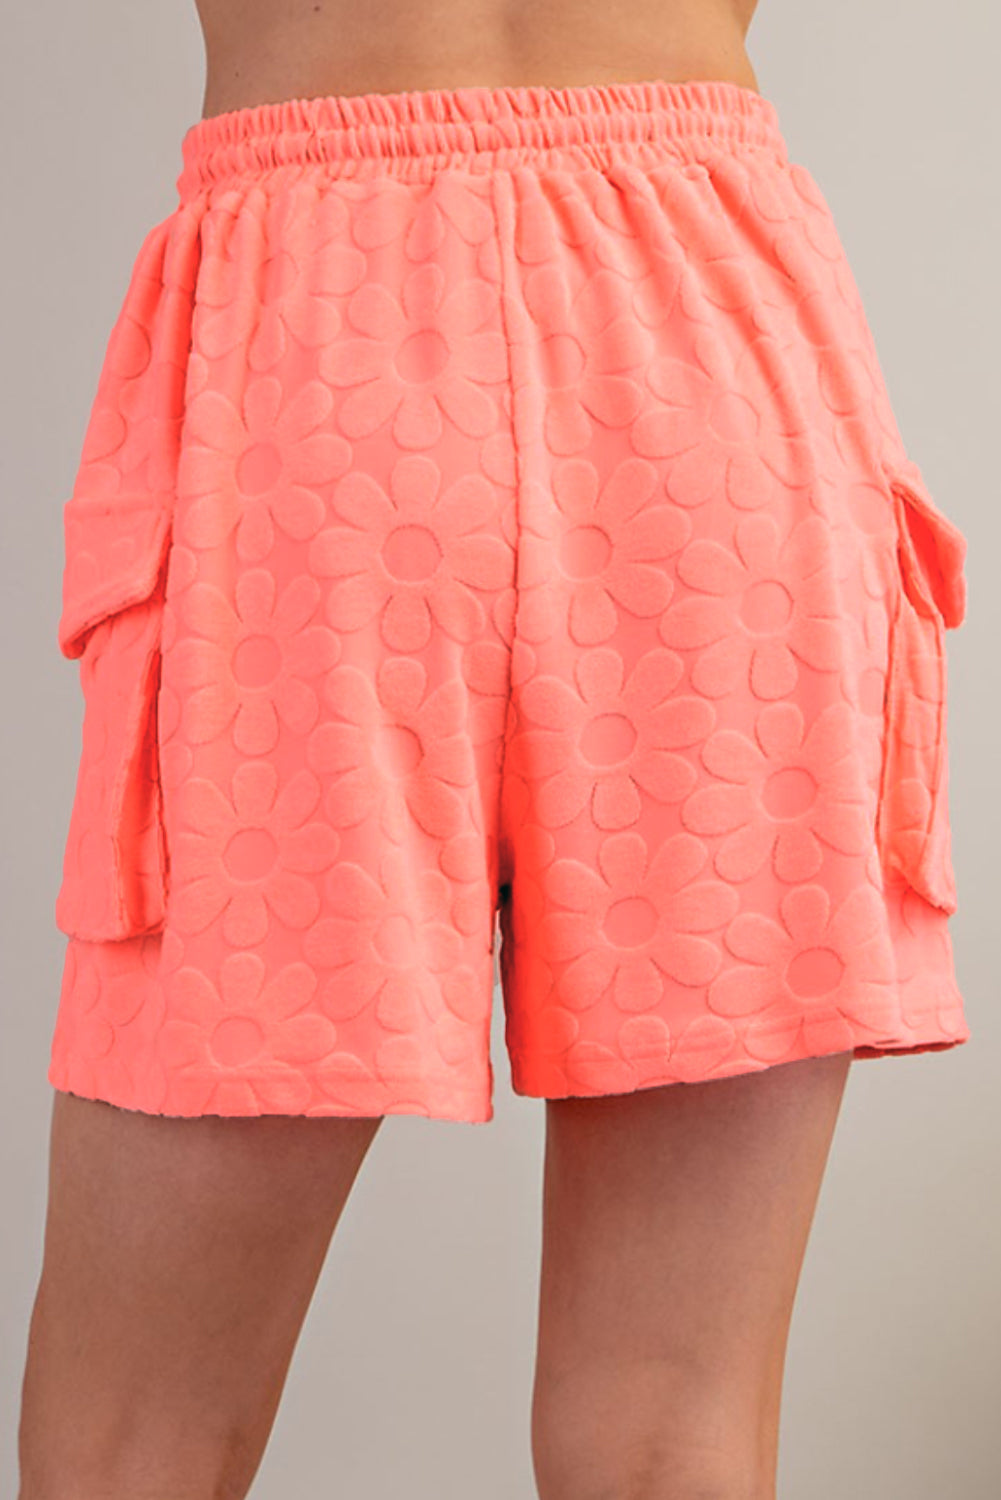 Grapefruit Orange Floral Textured Short Sleeve Top and Shorts Lounge Set